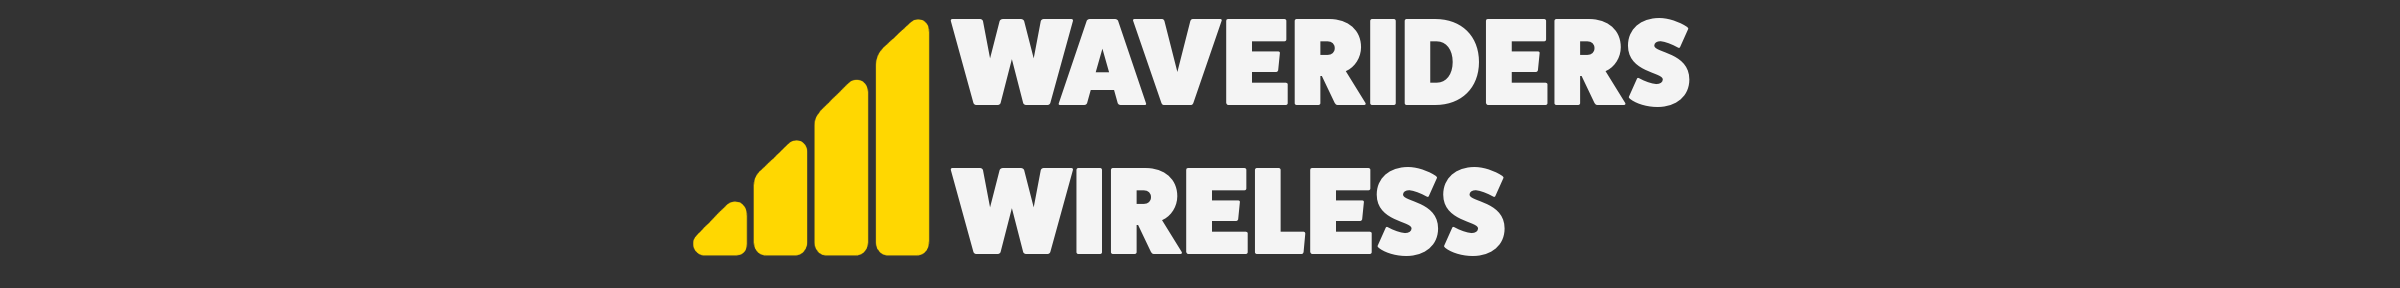 Waveriders Wireless